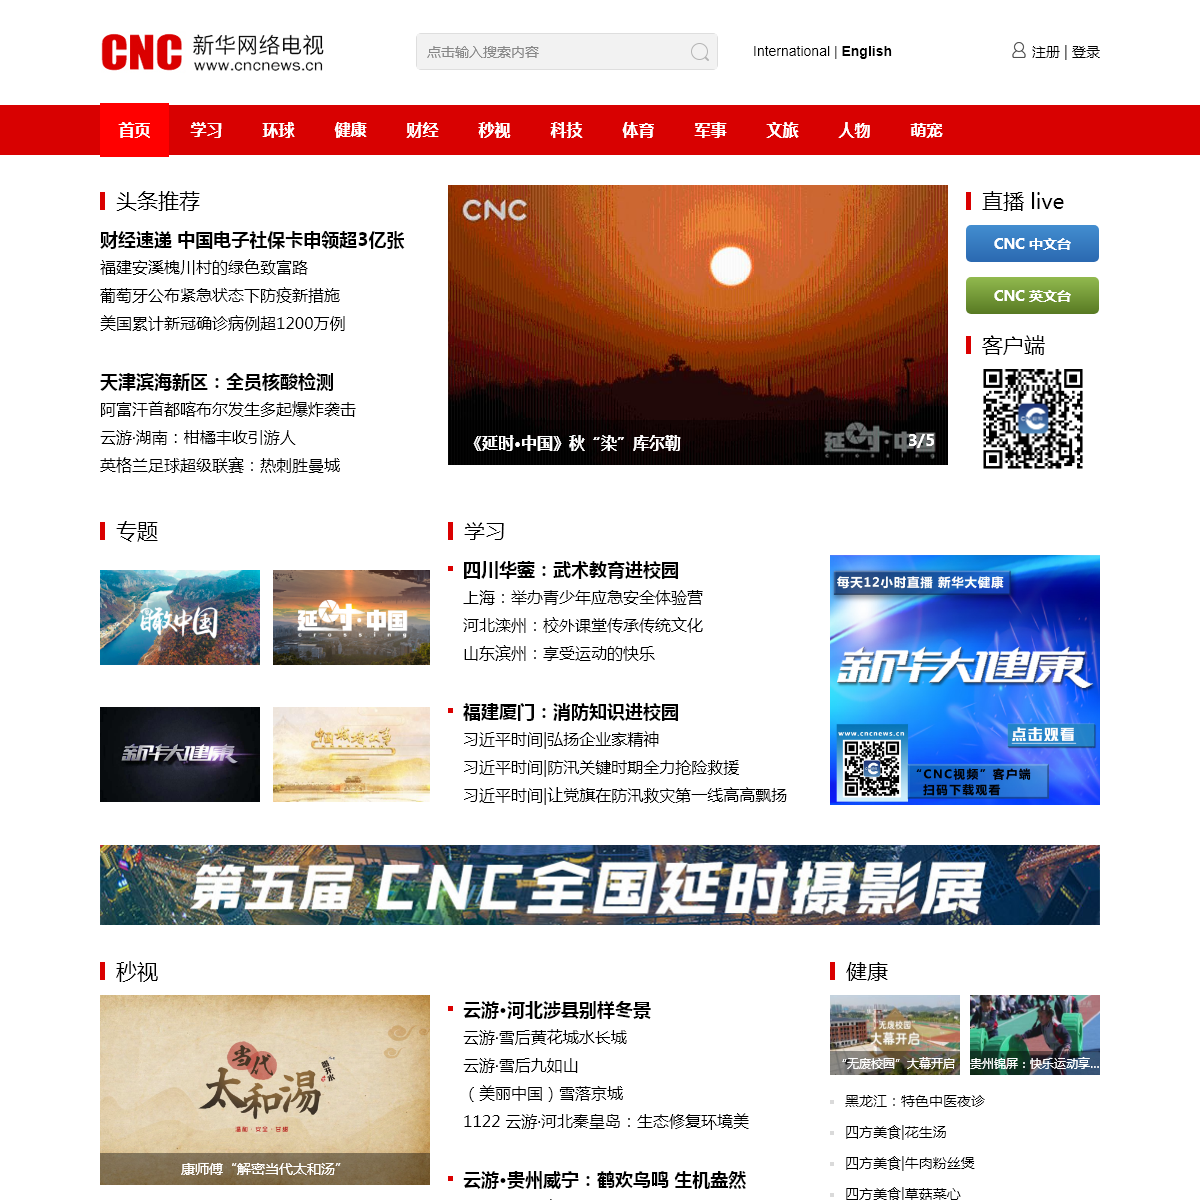 A complete backup of cncnews.cn